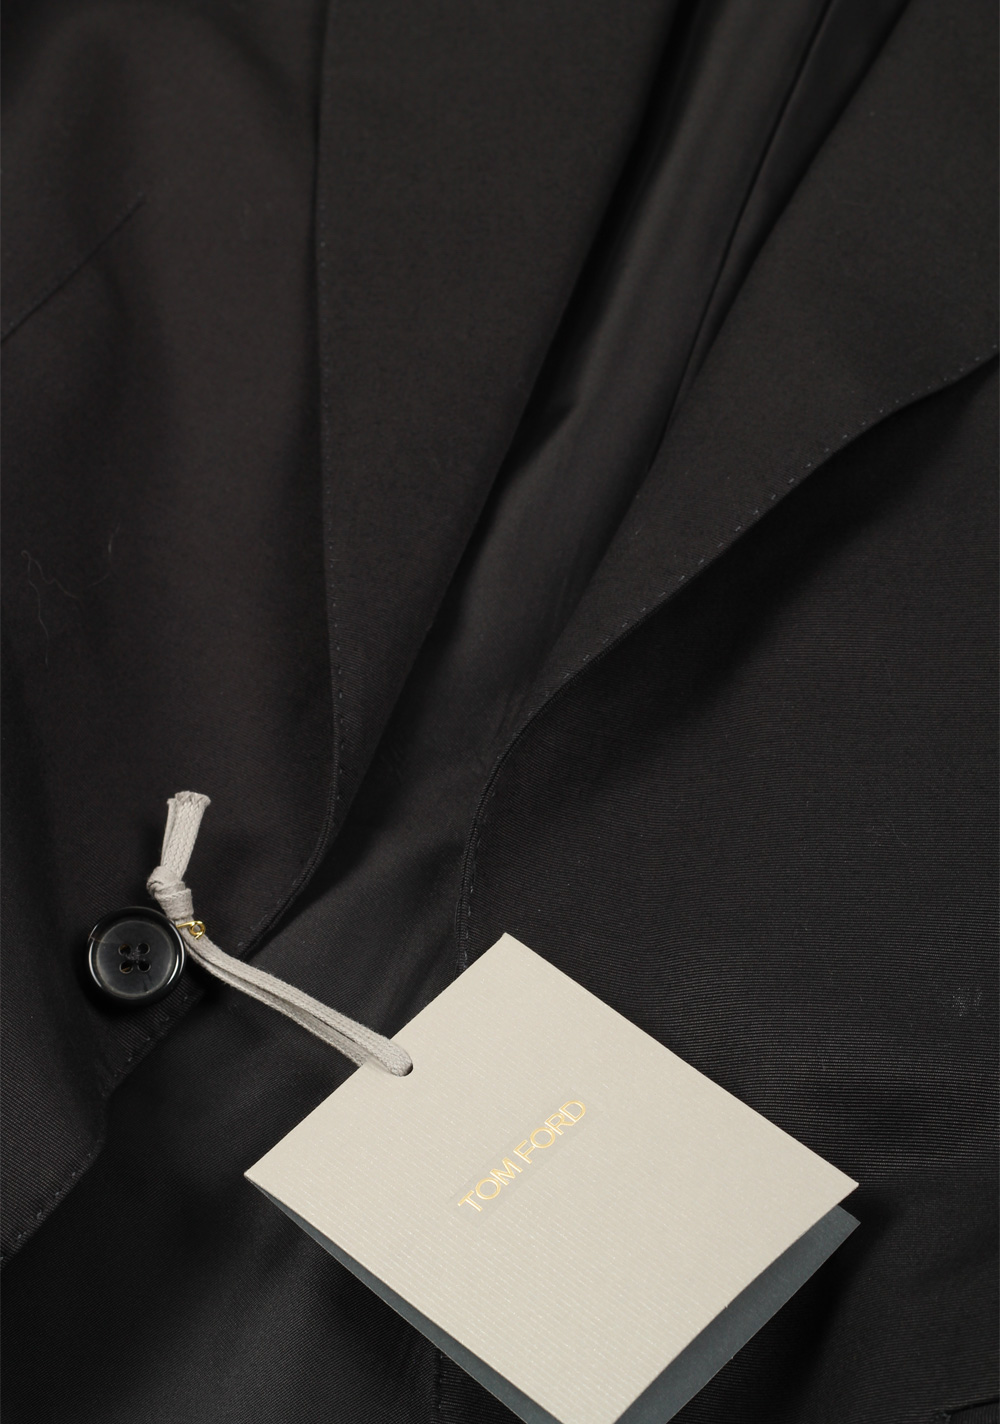 TOM FORD Shelton Black Sport Coat Size 46 / 36R U.S. | Costume Limité